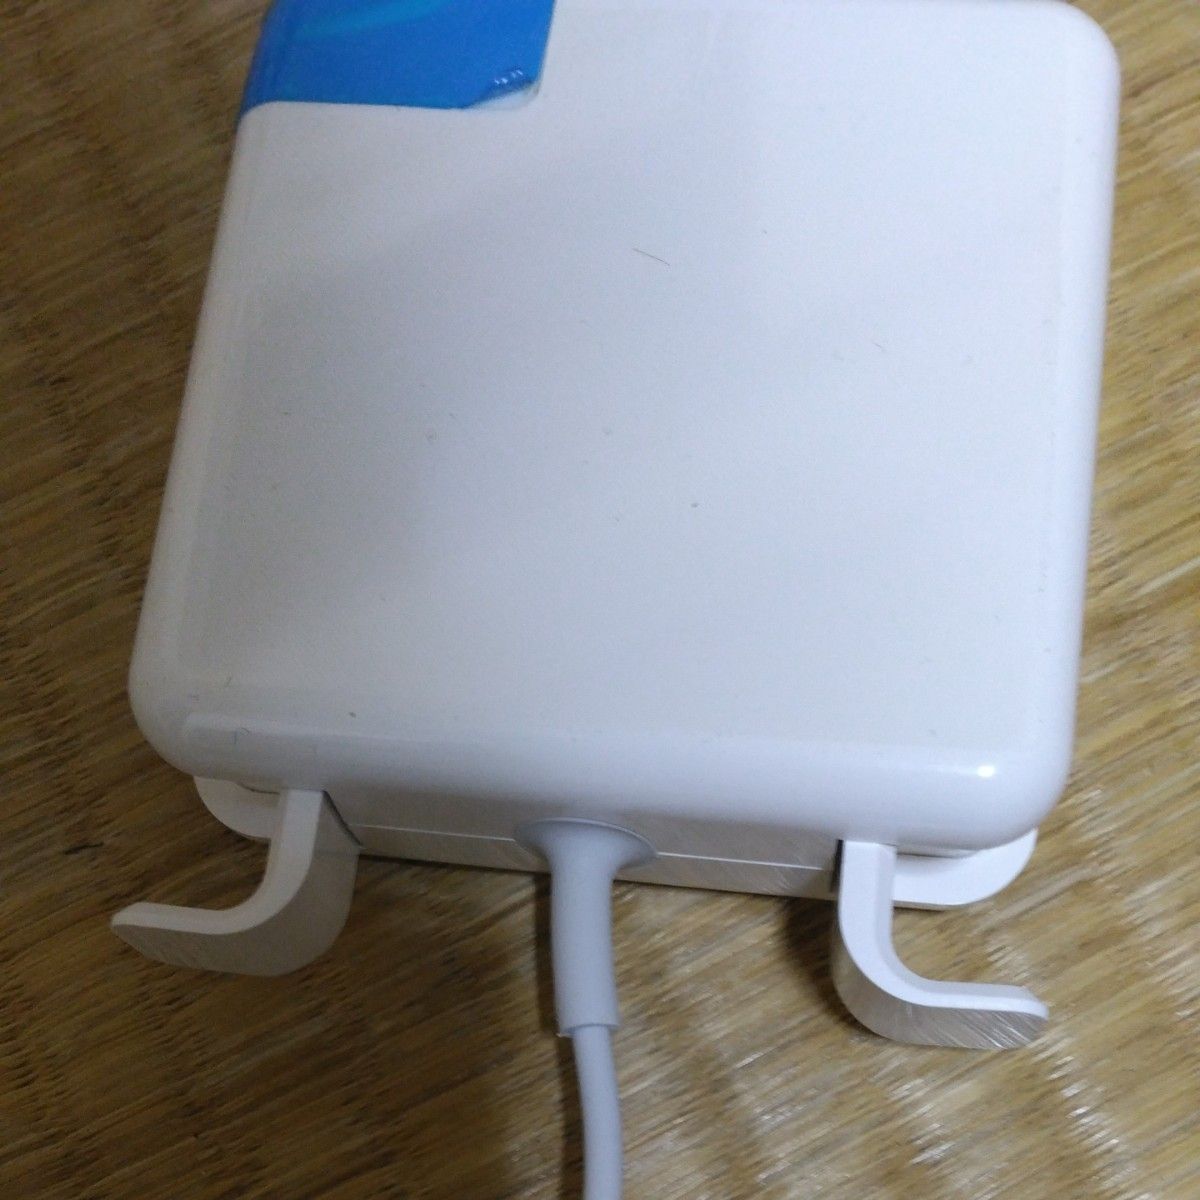 Macbook Pro 互換 充電器 85W Mag 2 T型【PSE認証】